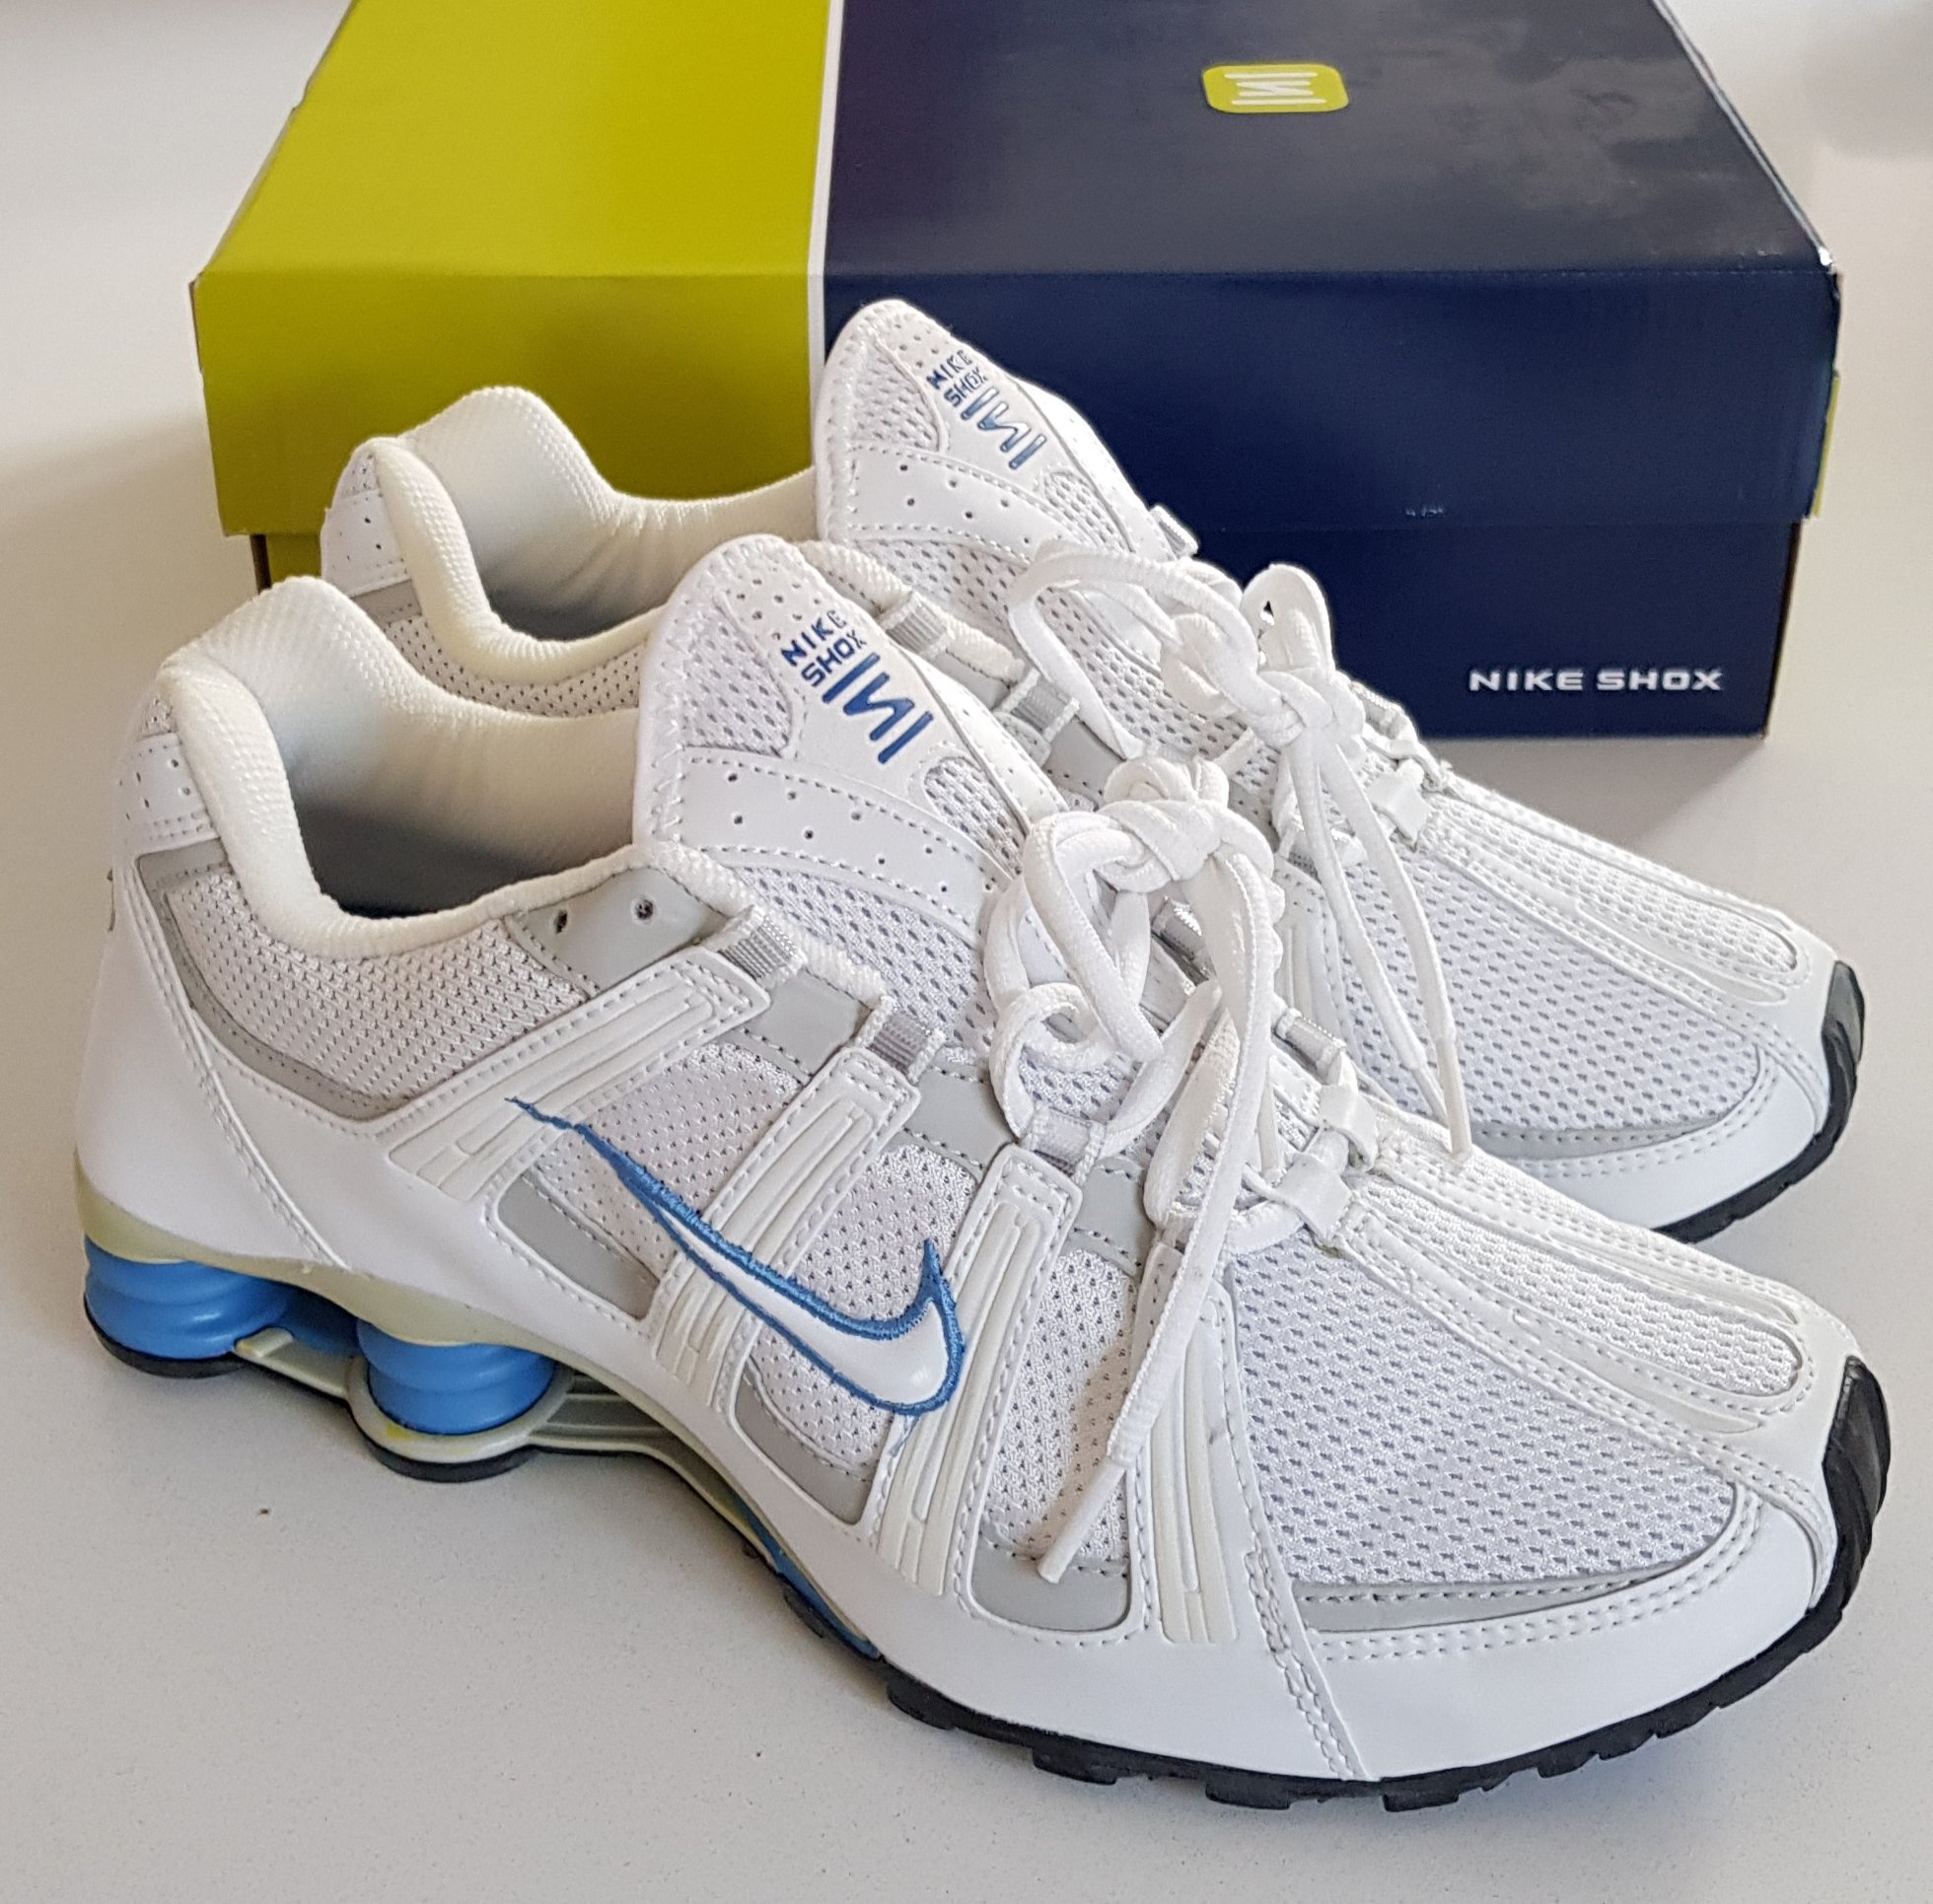 stadig Allergisk Har råd til Unique Sportswear Shop on Twitter: "OG 2004 NIKE SHOX TURBO SNEAKERS  TRAINERS NZ DS RARE RETRO BNIB MEN'S UK 9, US10. AVAILBLE NOW. #Nike  #NikeShoxTurbo #nikerunning #sneakerheads #kicksonfire #solecollector #nikes  #SneakerScouts #sneakernews #